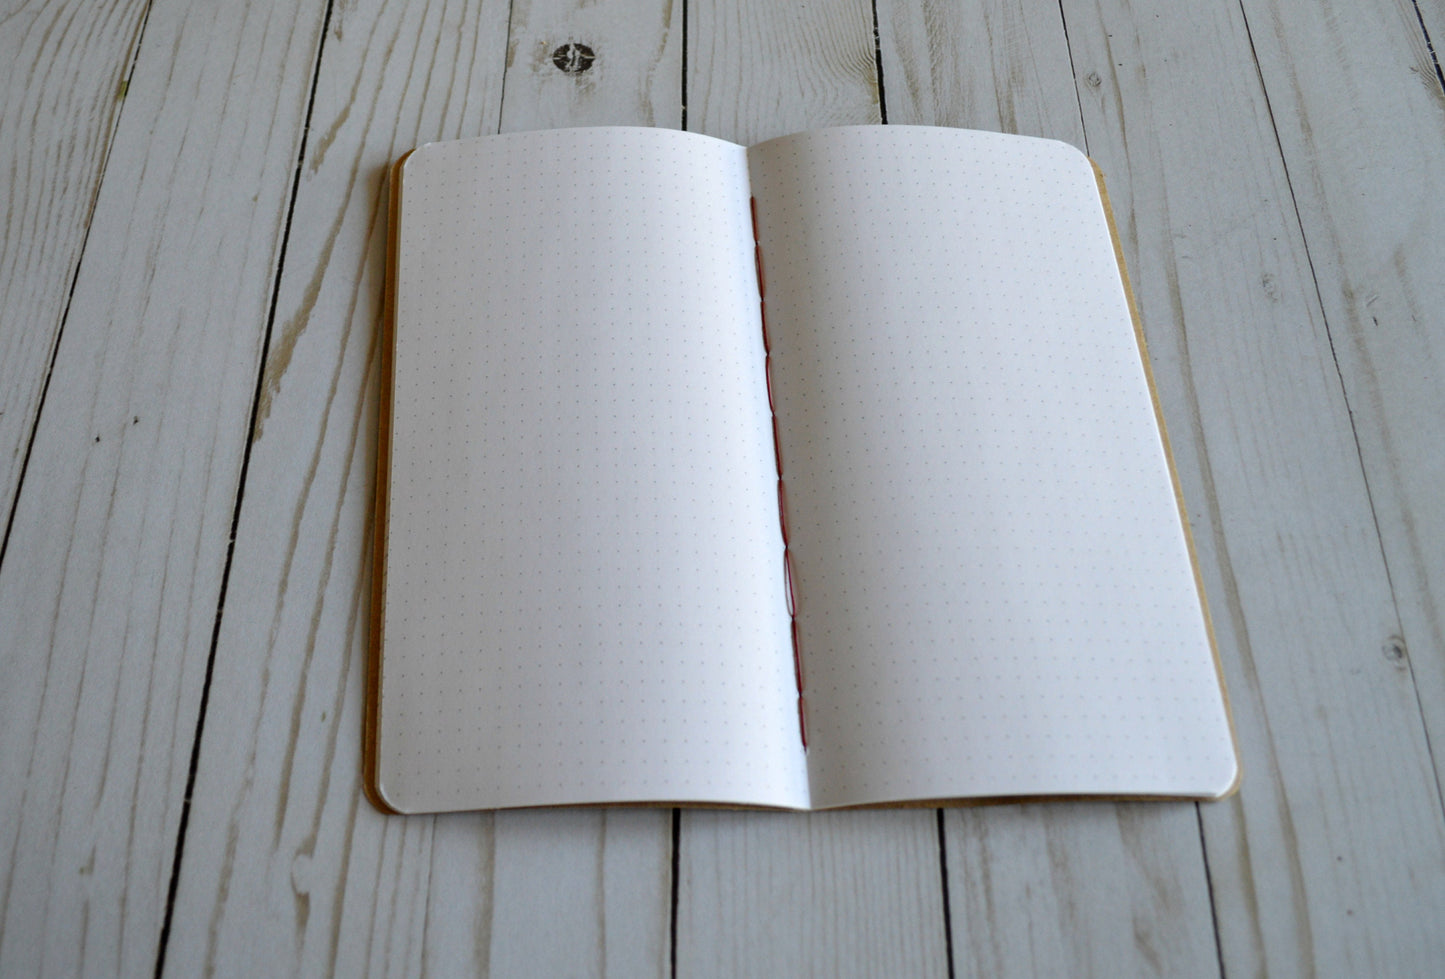 Dot Grid Journal Travelers Notebook Insert, Rhodia Paper Midori Insert, Journal Notebook, TN Notebook Insert